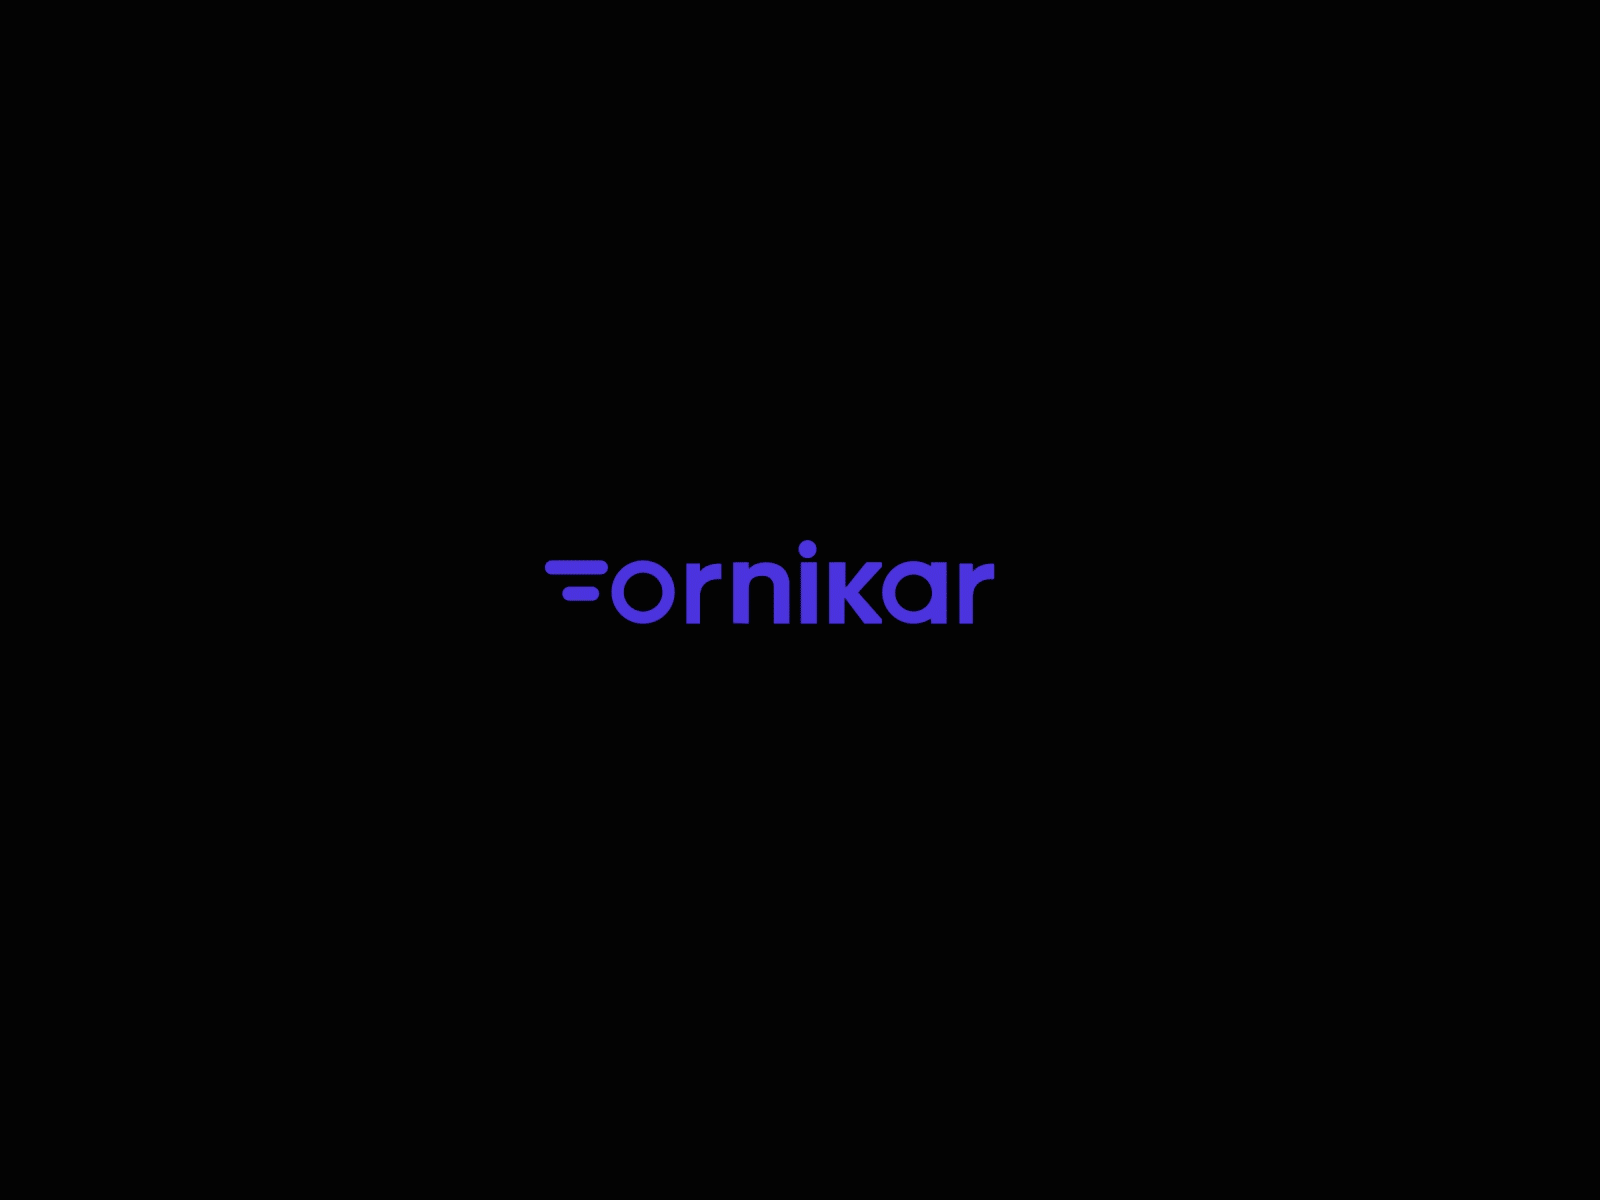 Animation Logo Ornikar